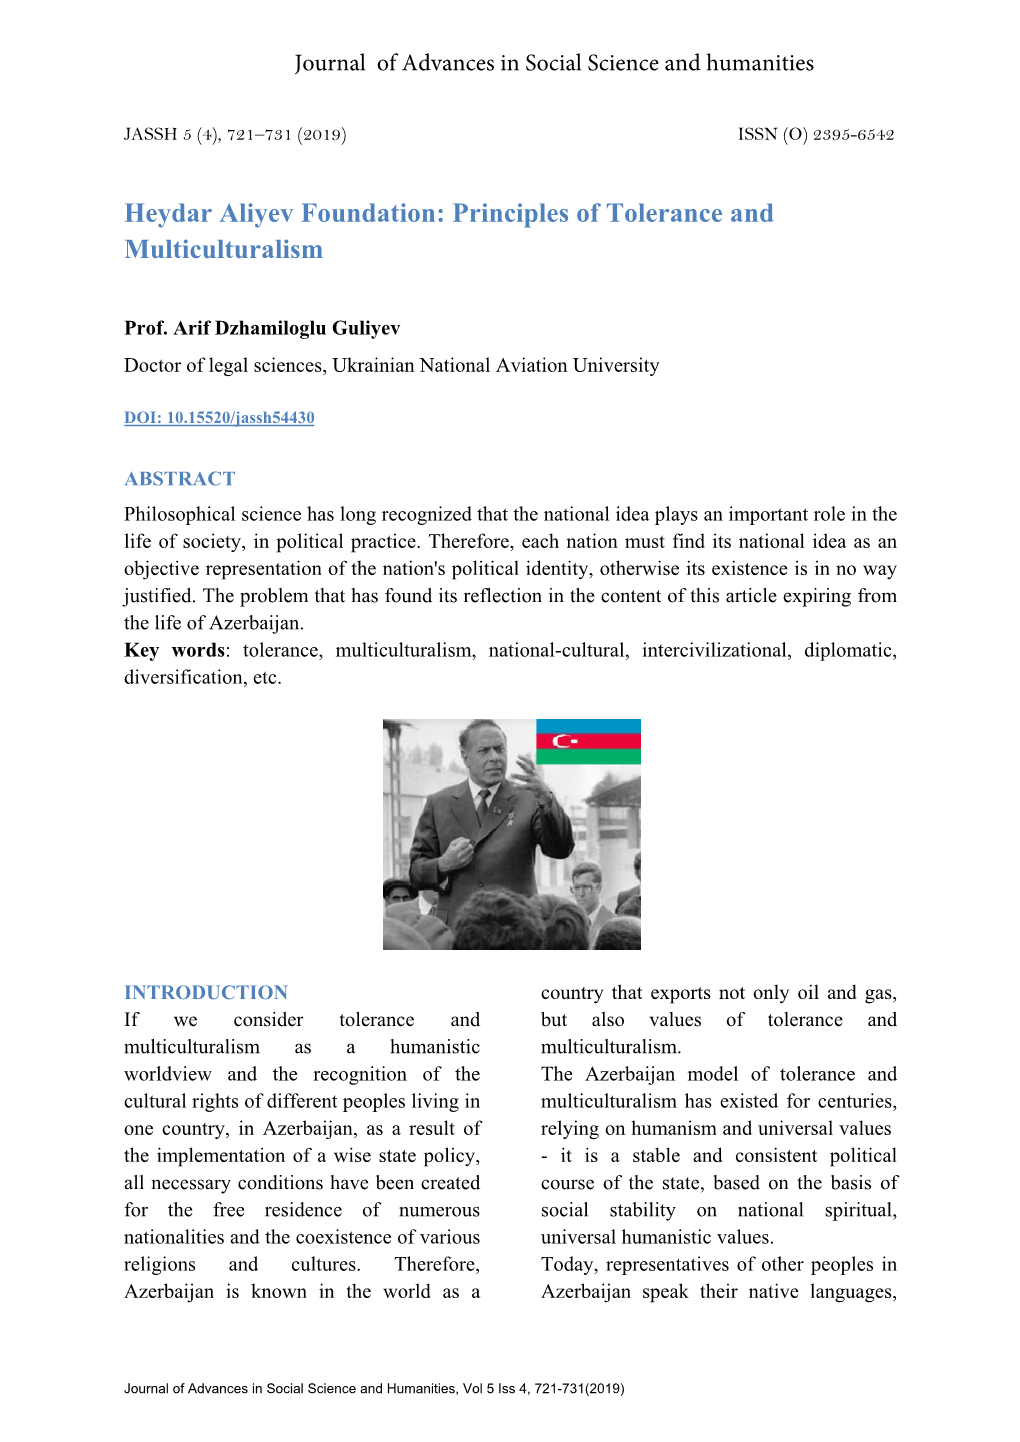 Heydar Aliyev Foundation: Principles of Tolerance and Multiculturalism